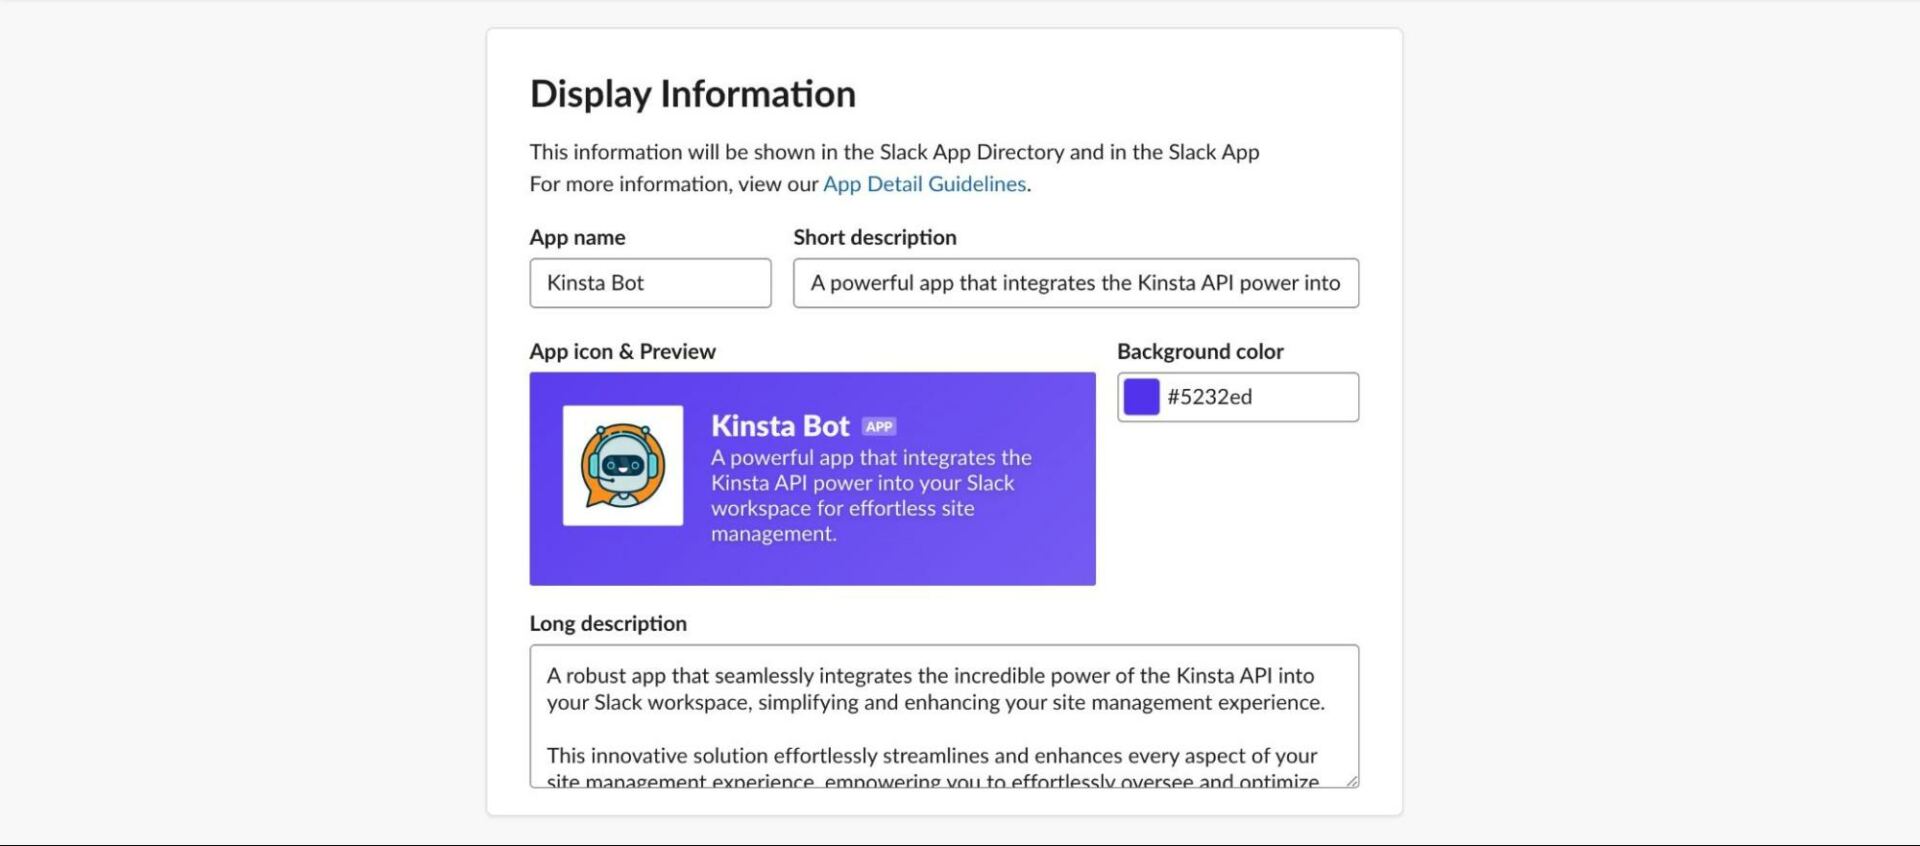 Slackbot display information